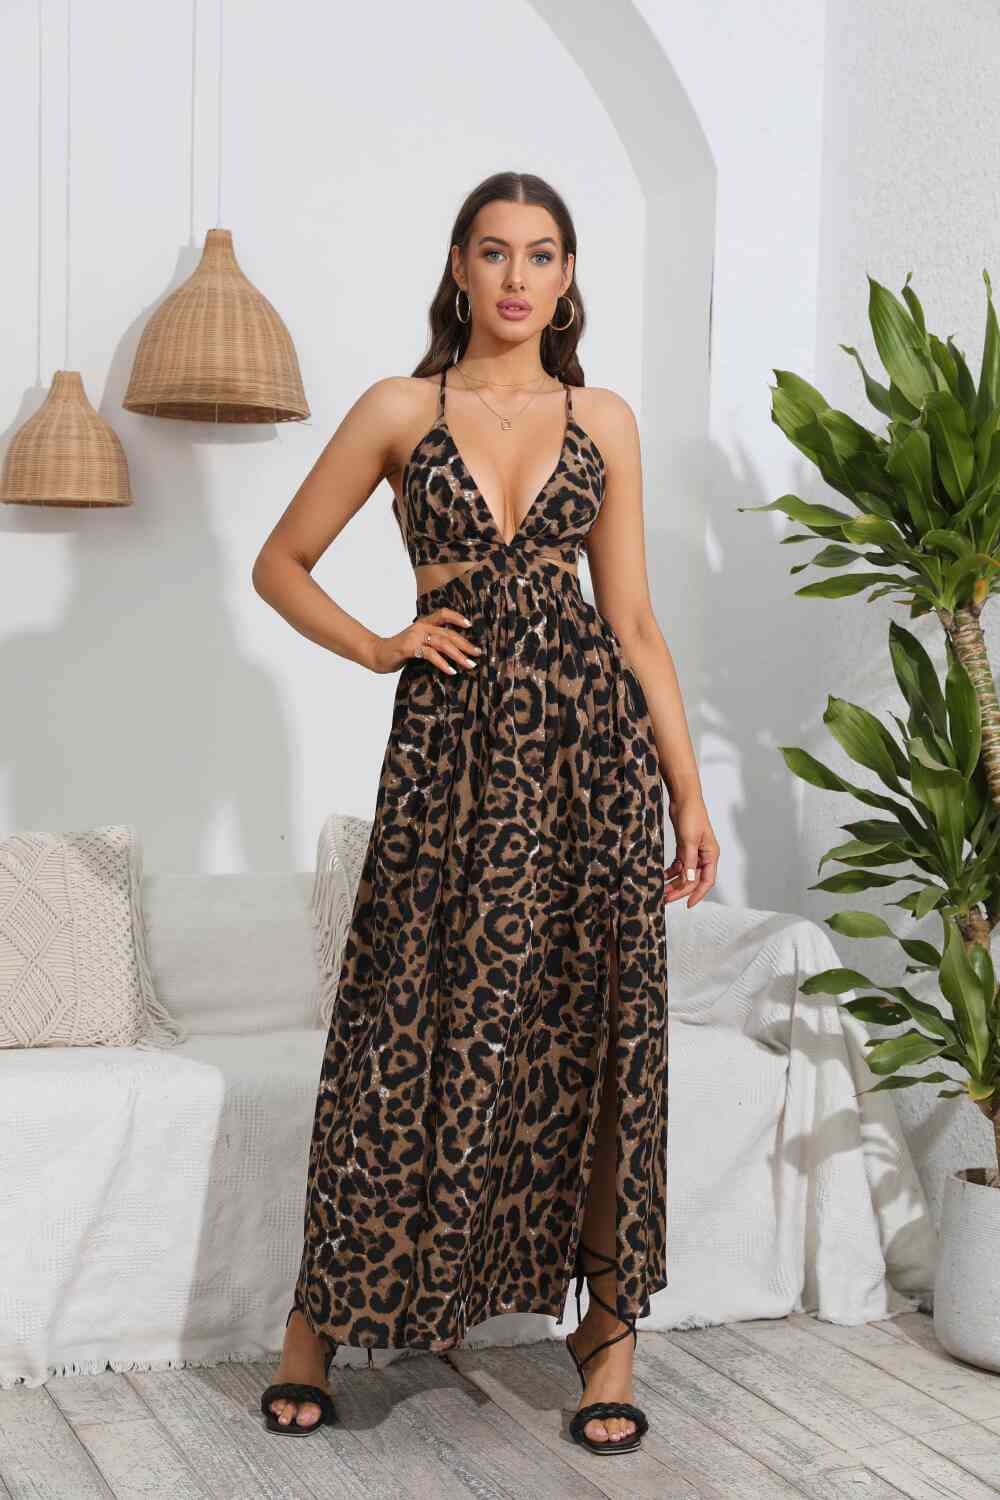 Leopard Deep V Tie Back Split Dress